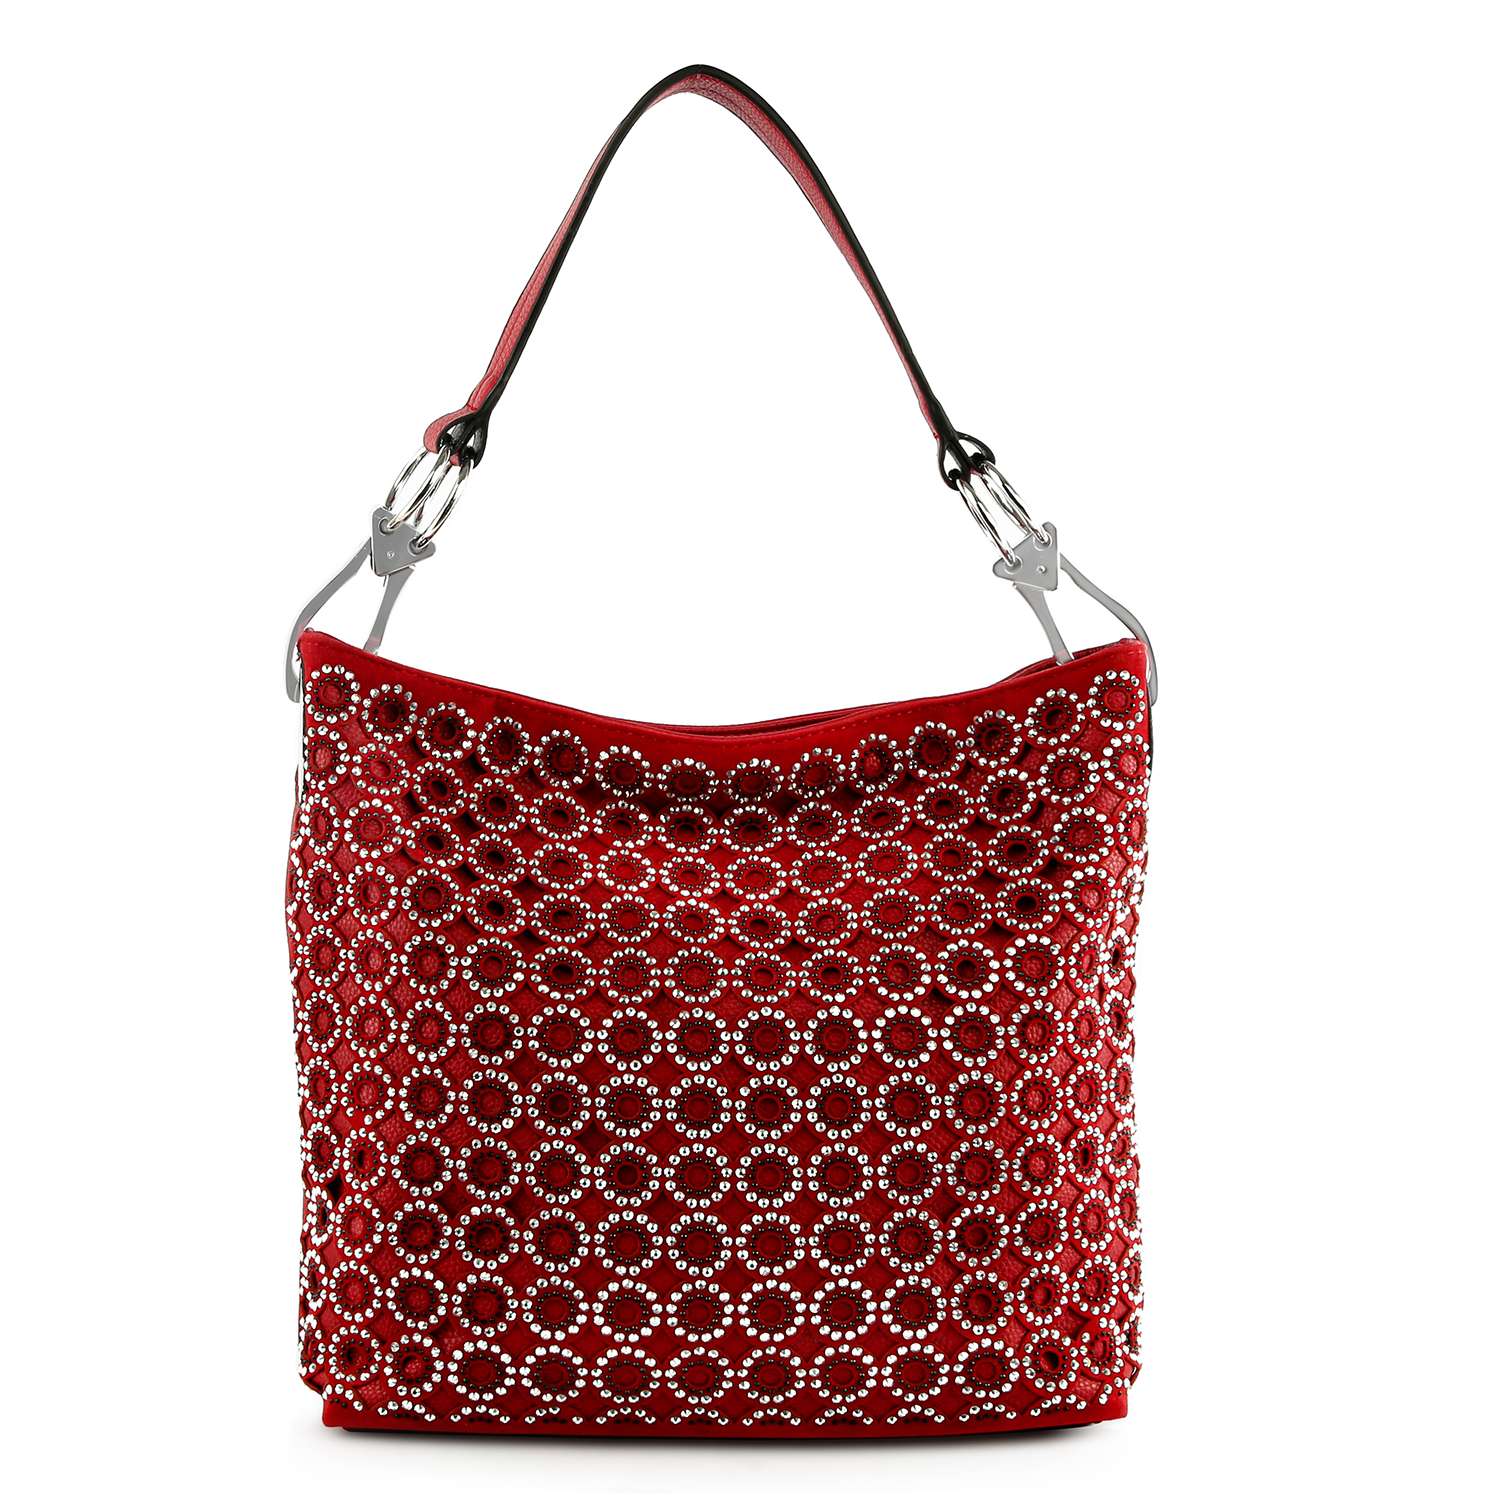 Rhinestone Patterned Hobo Handbag - Red